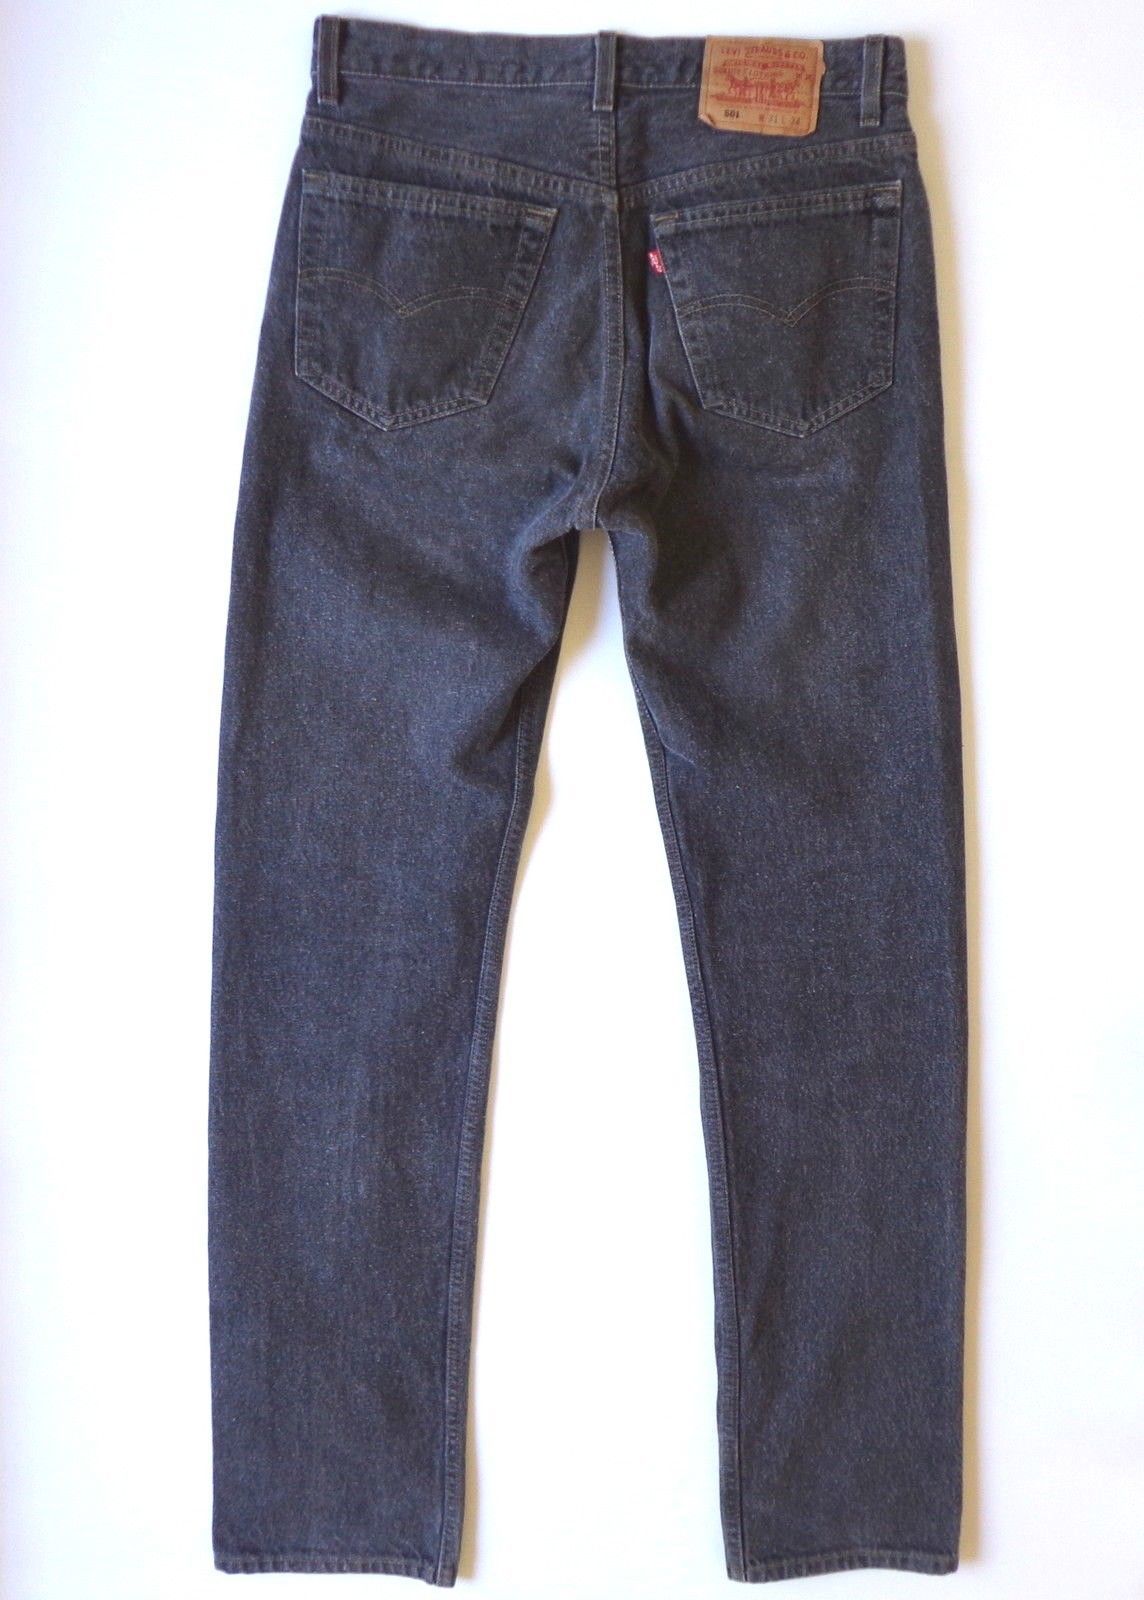 Levis 501 Jeans Mens Dark Gray Button Fly Denim 31 x 34 USA Made - $49.95